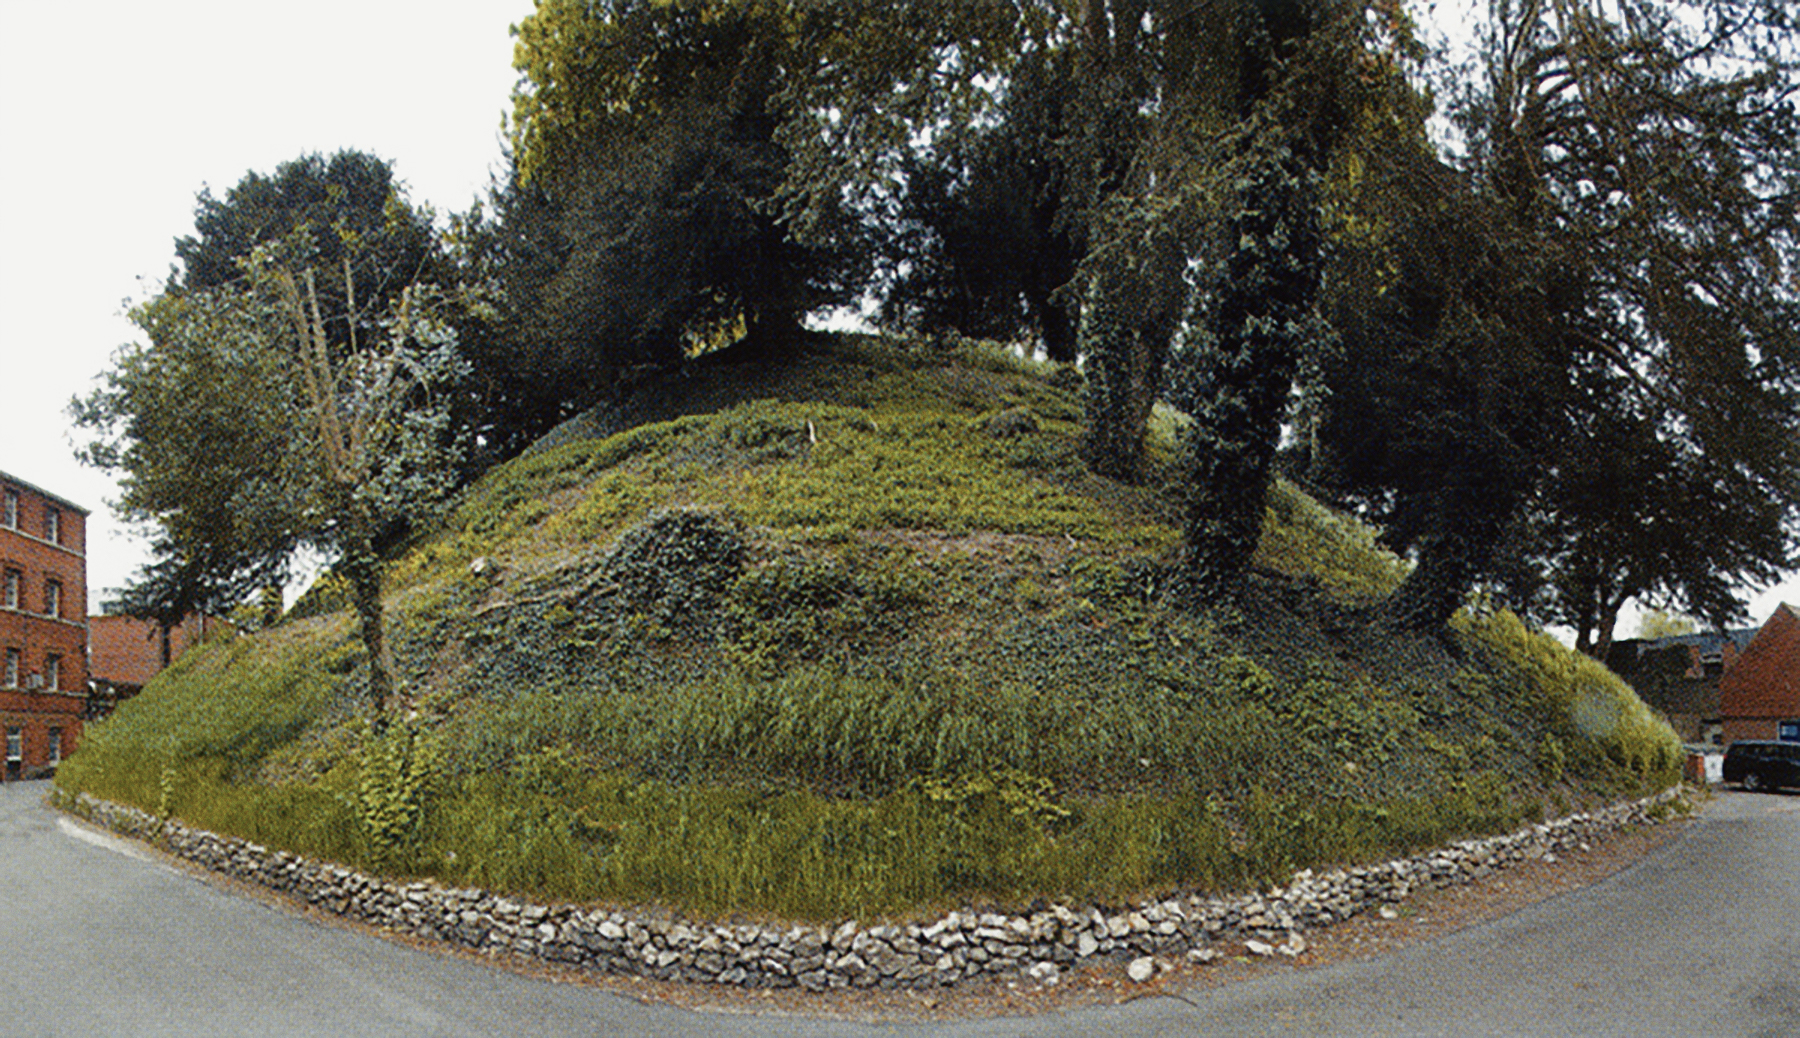 The Marlborough Mound